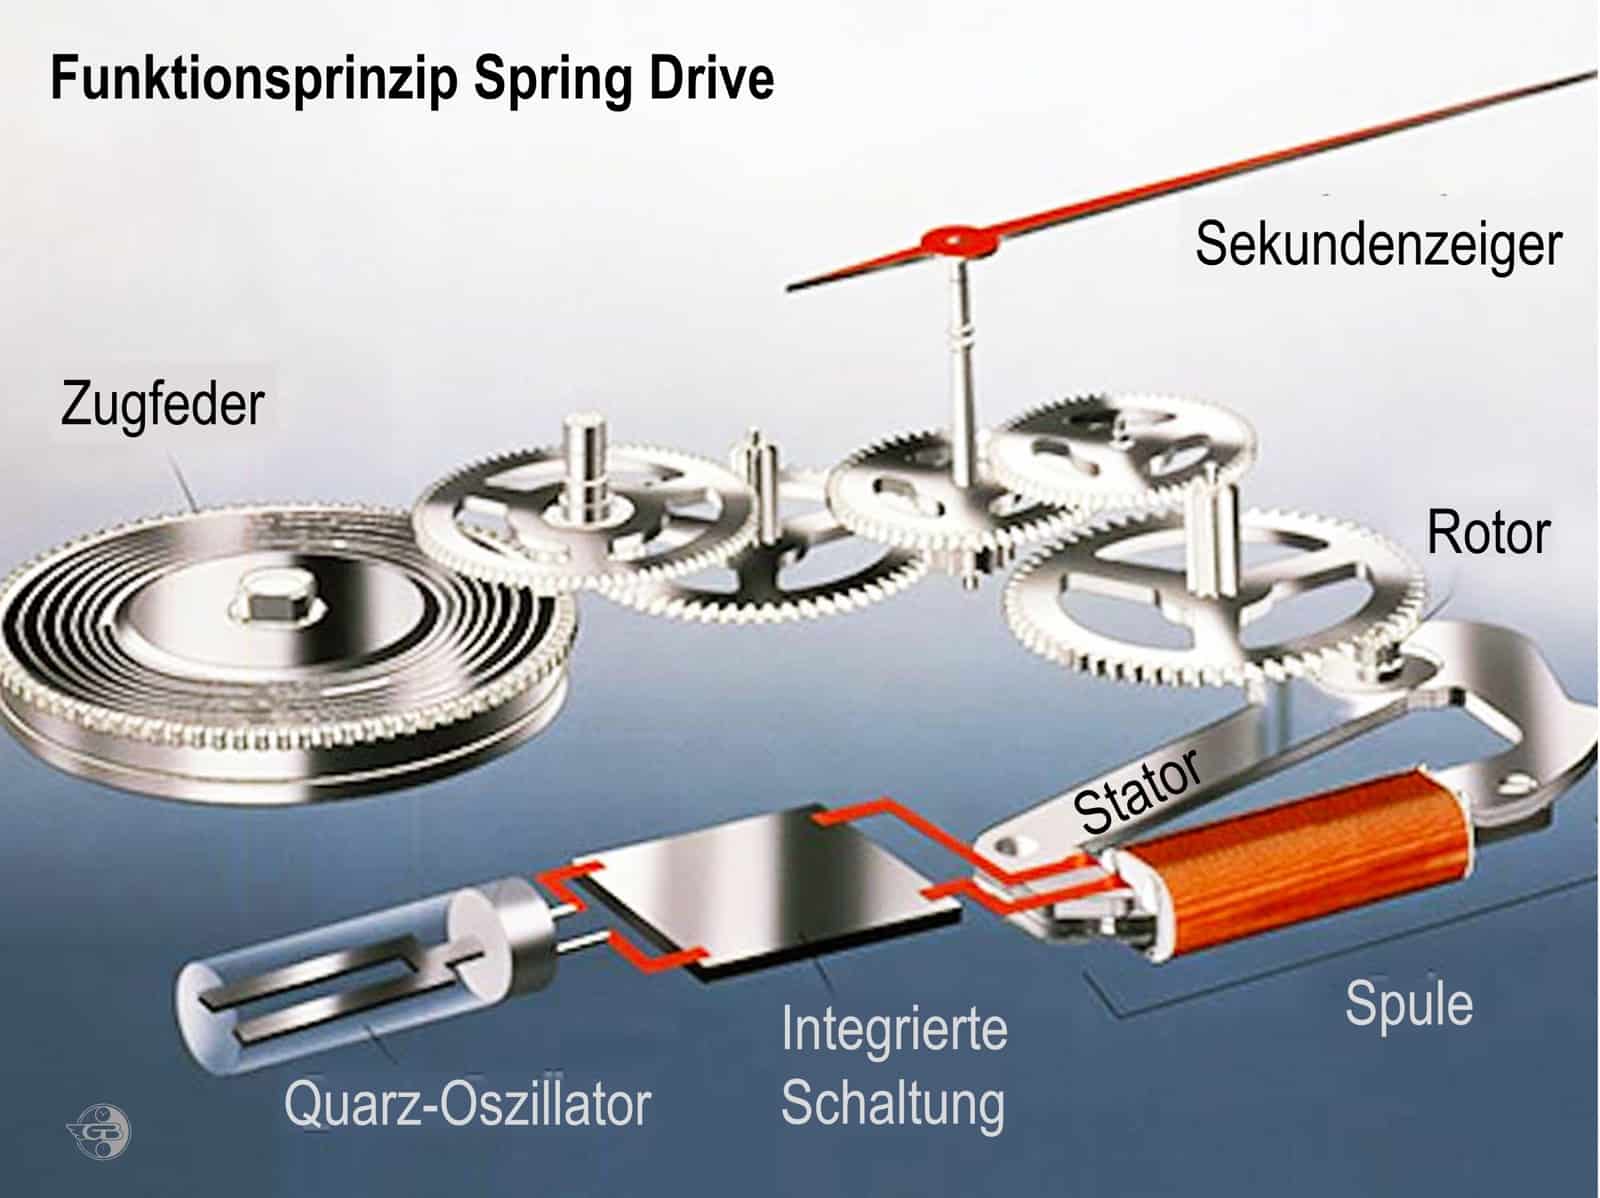 Grand Seiko Spring Drive Funktionsprinzip (C) Uhrenkosmos